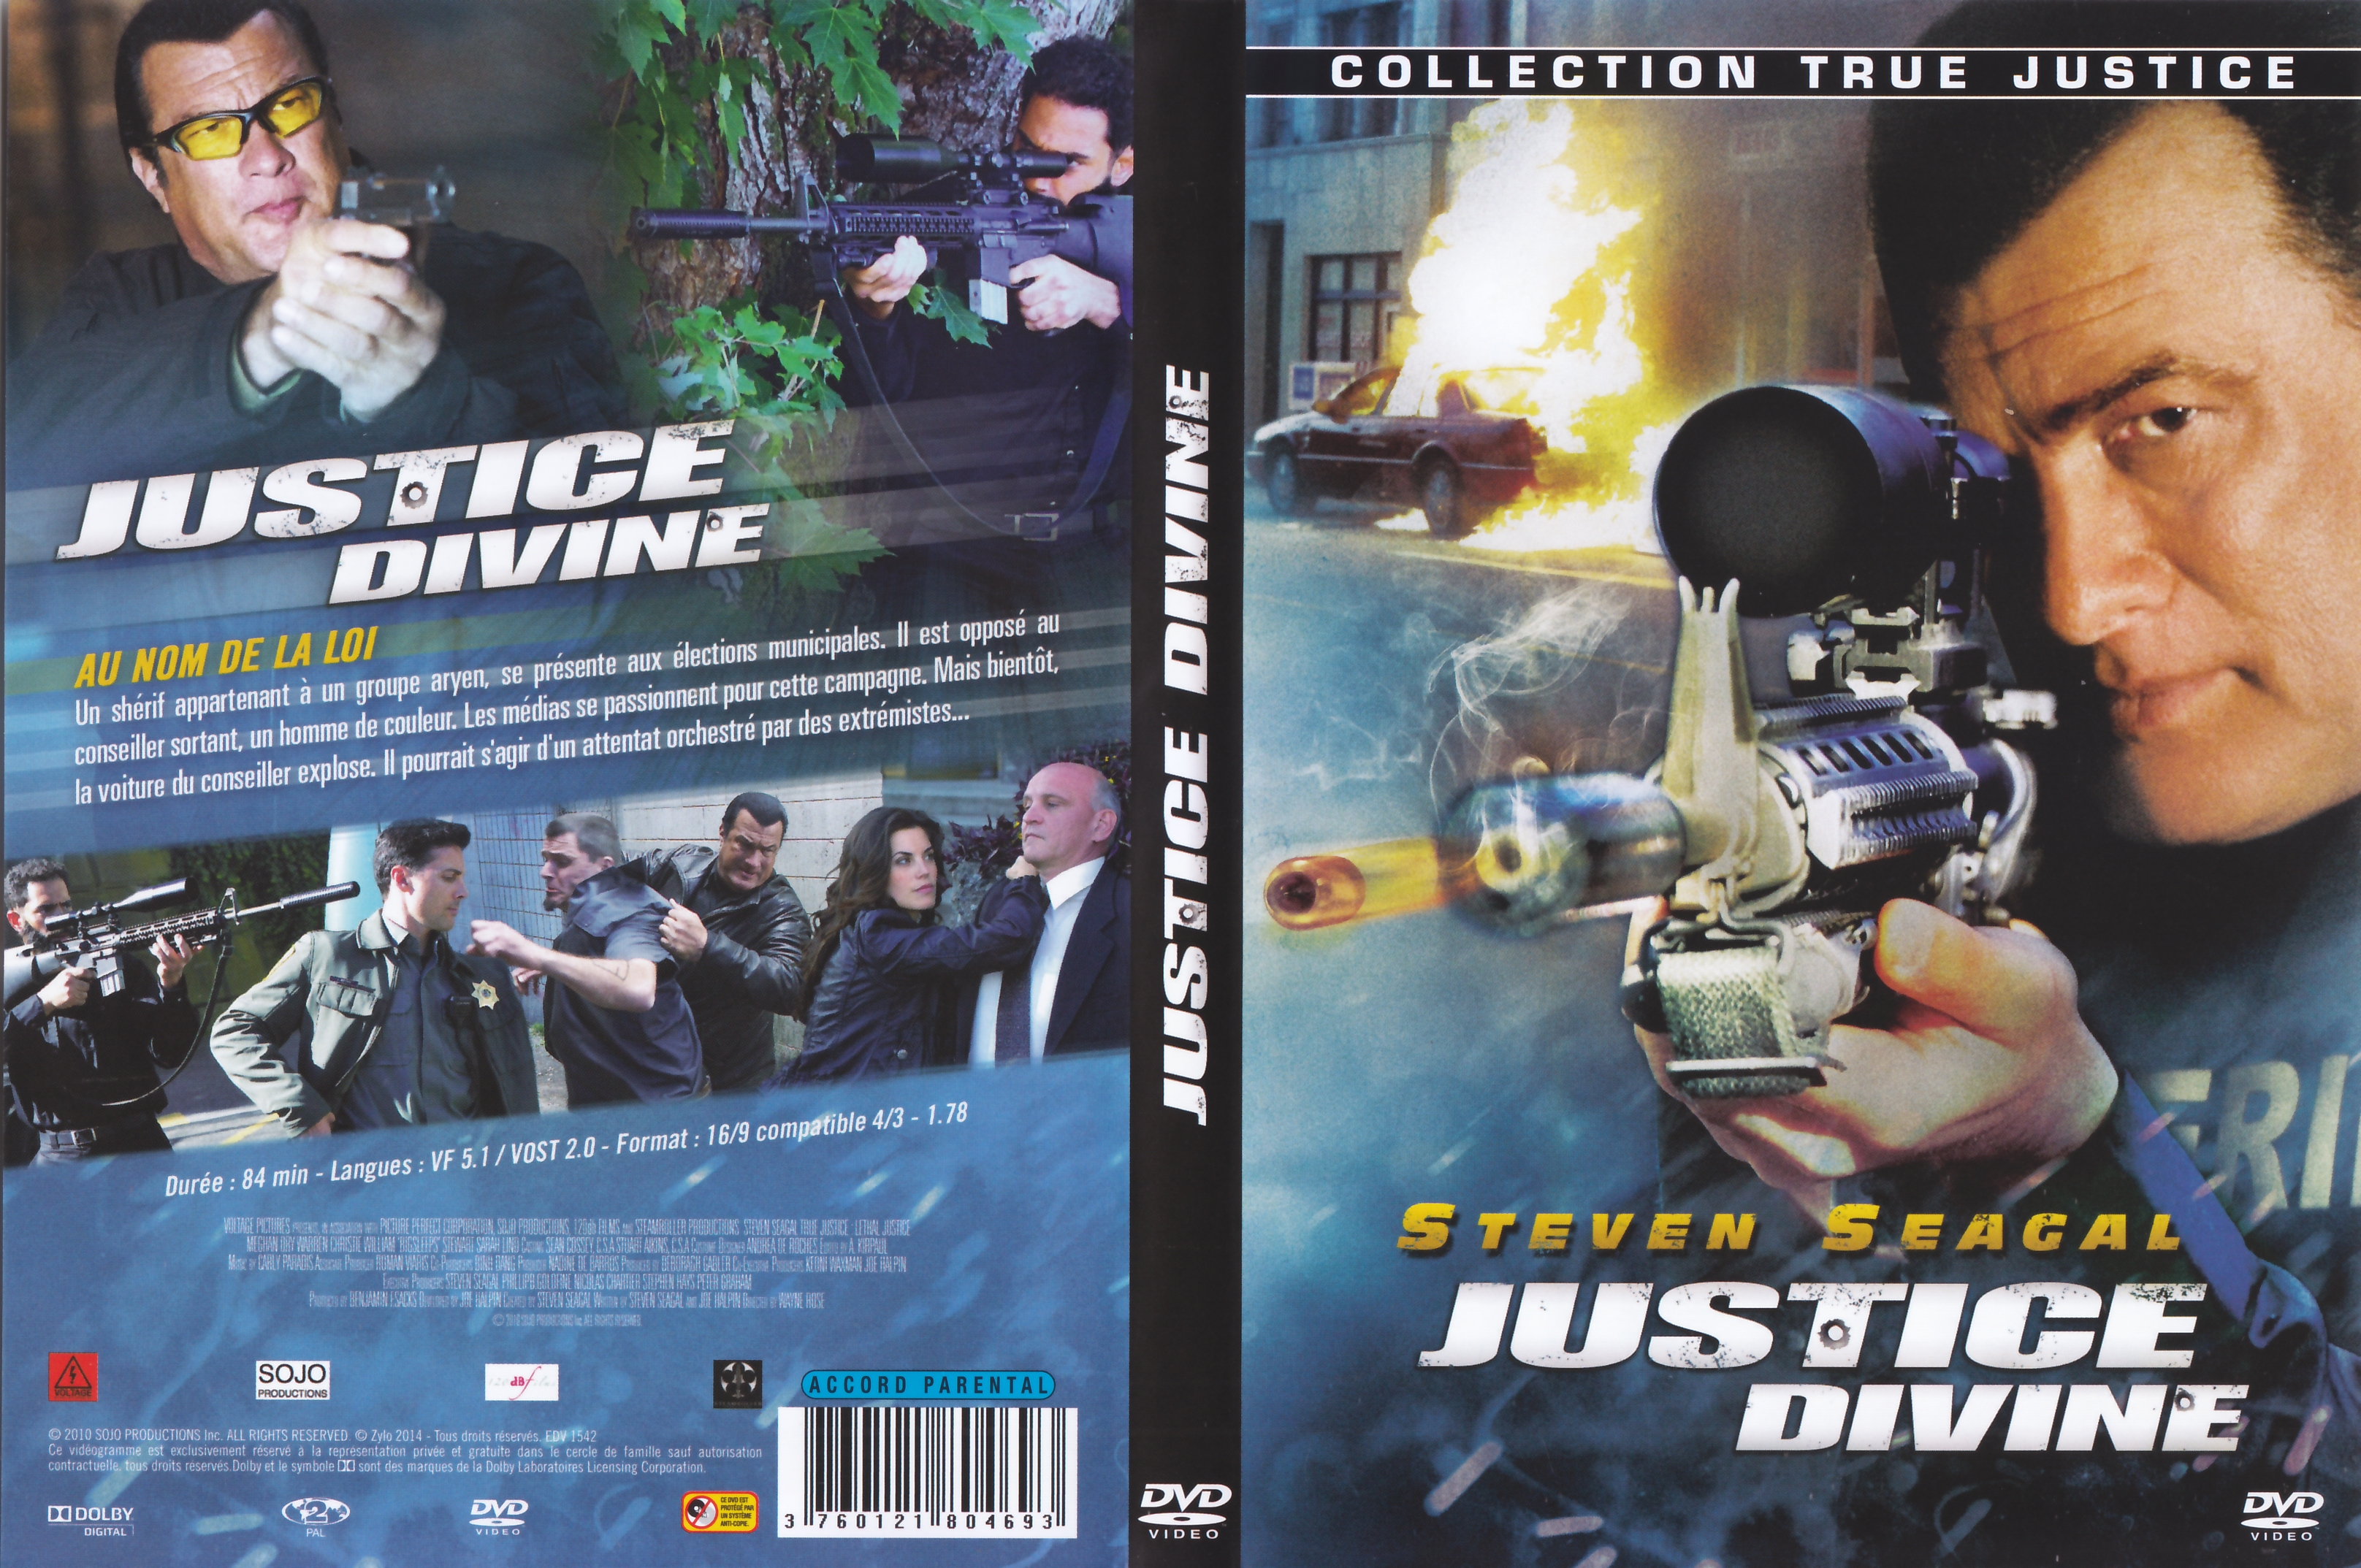 Jaquette DVD True Justice 4 Justice Divine